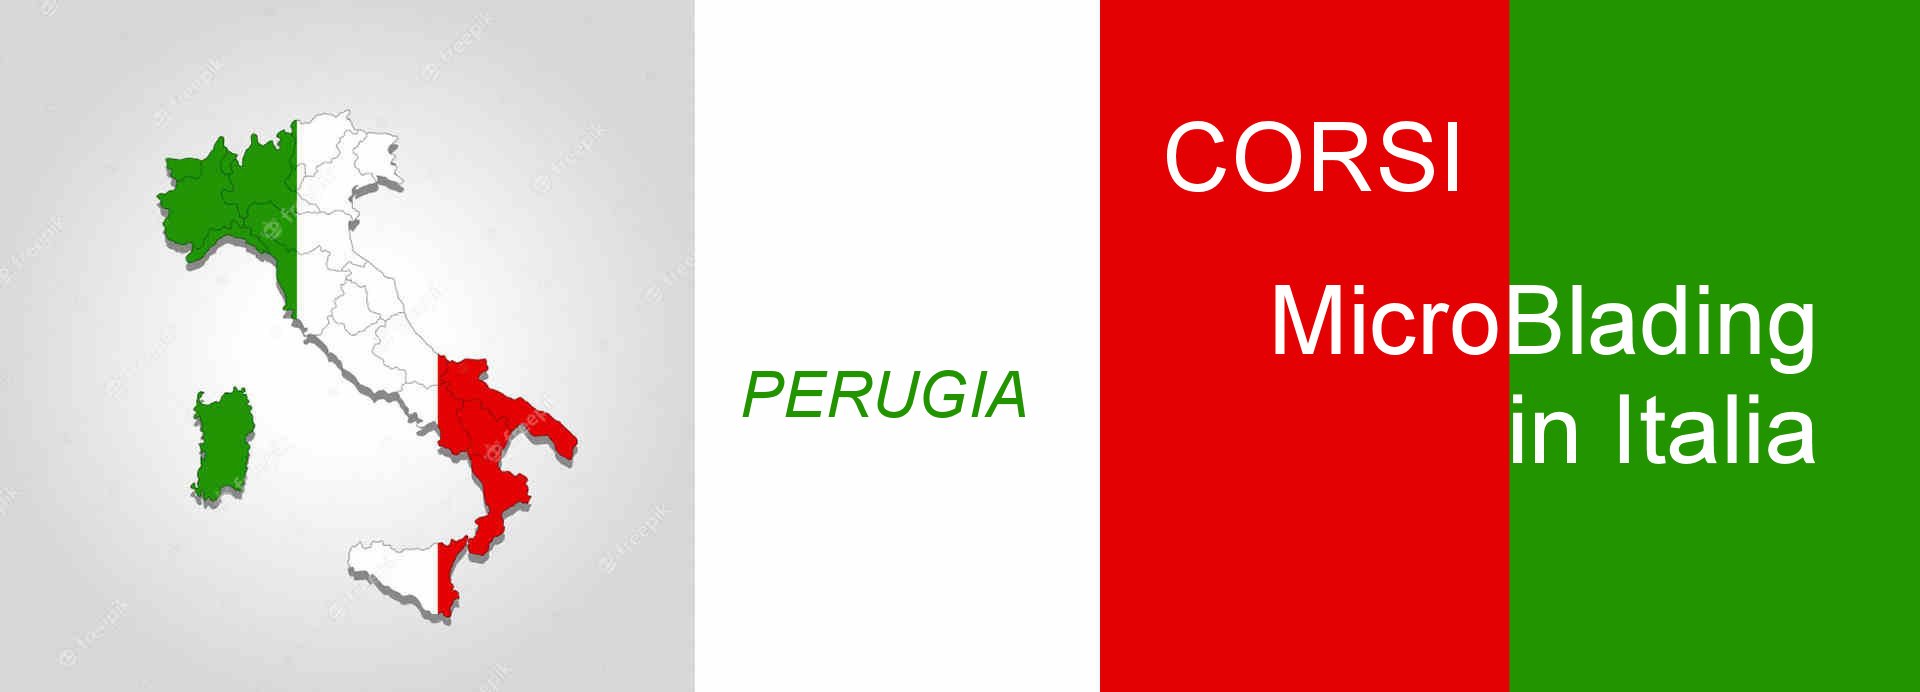 Corsi MicroBlading Perugia